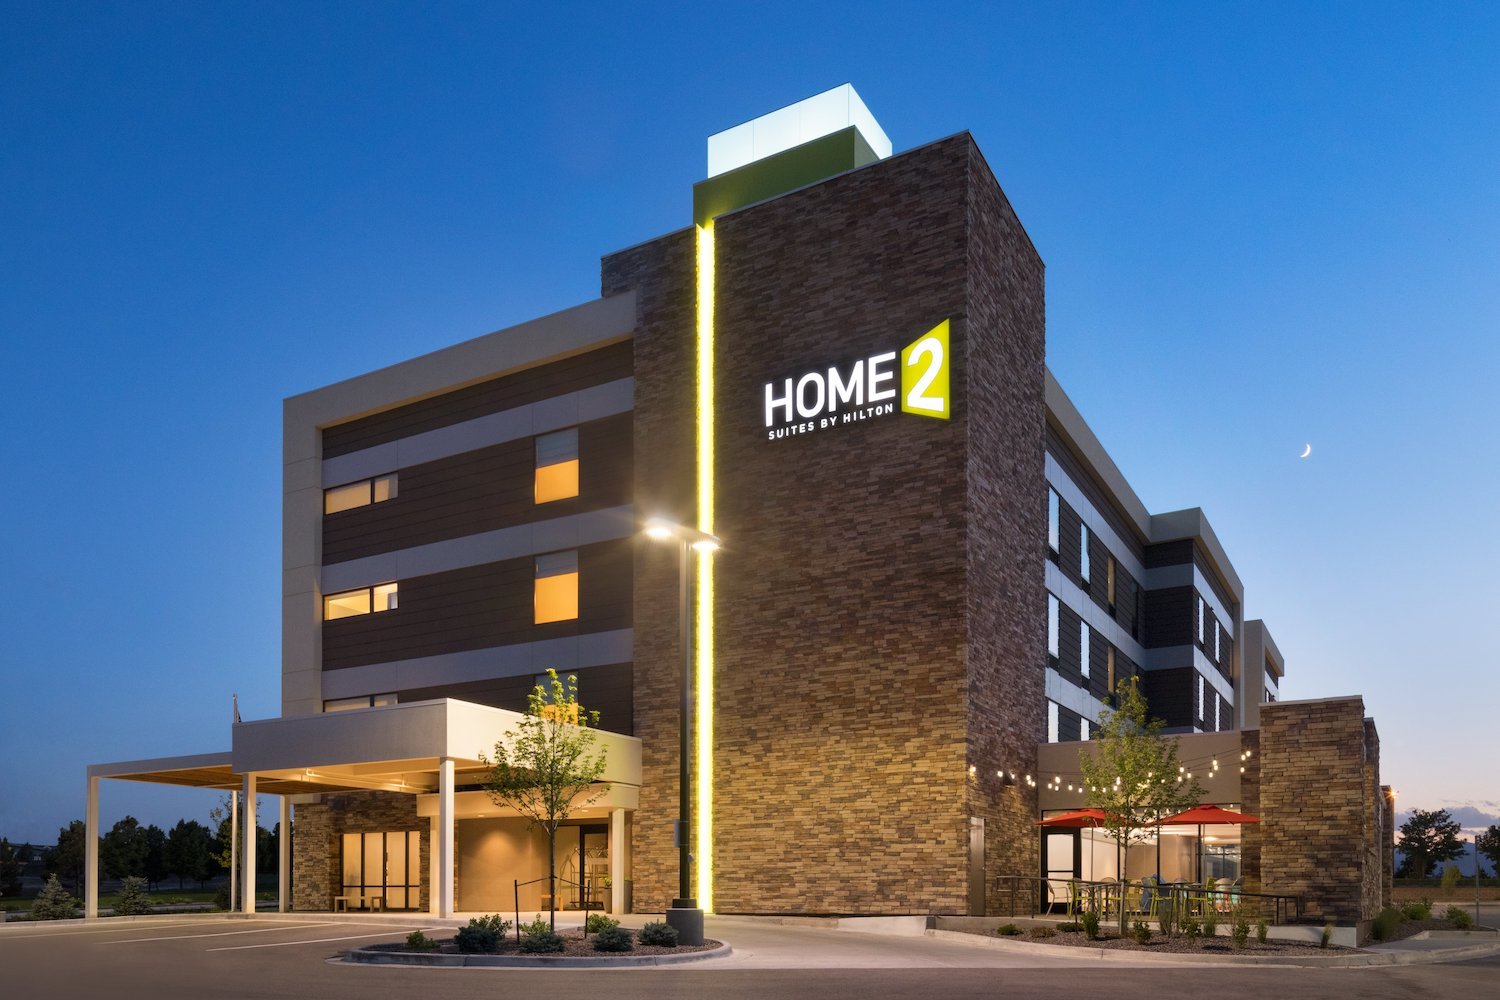 Photo of Home2 Suites by Hilton Denver/Highlands Ranch, Highlands Ranch, CO